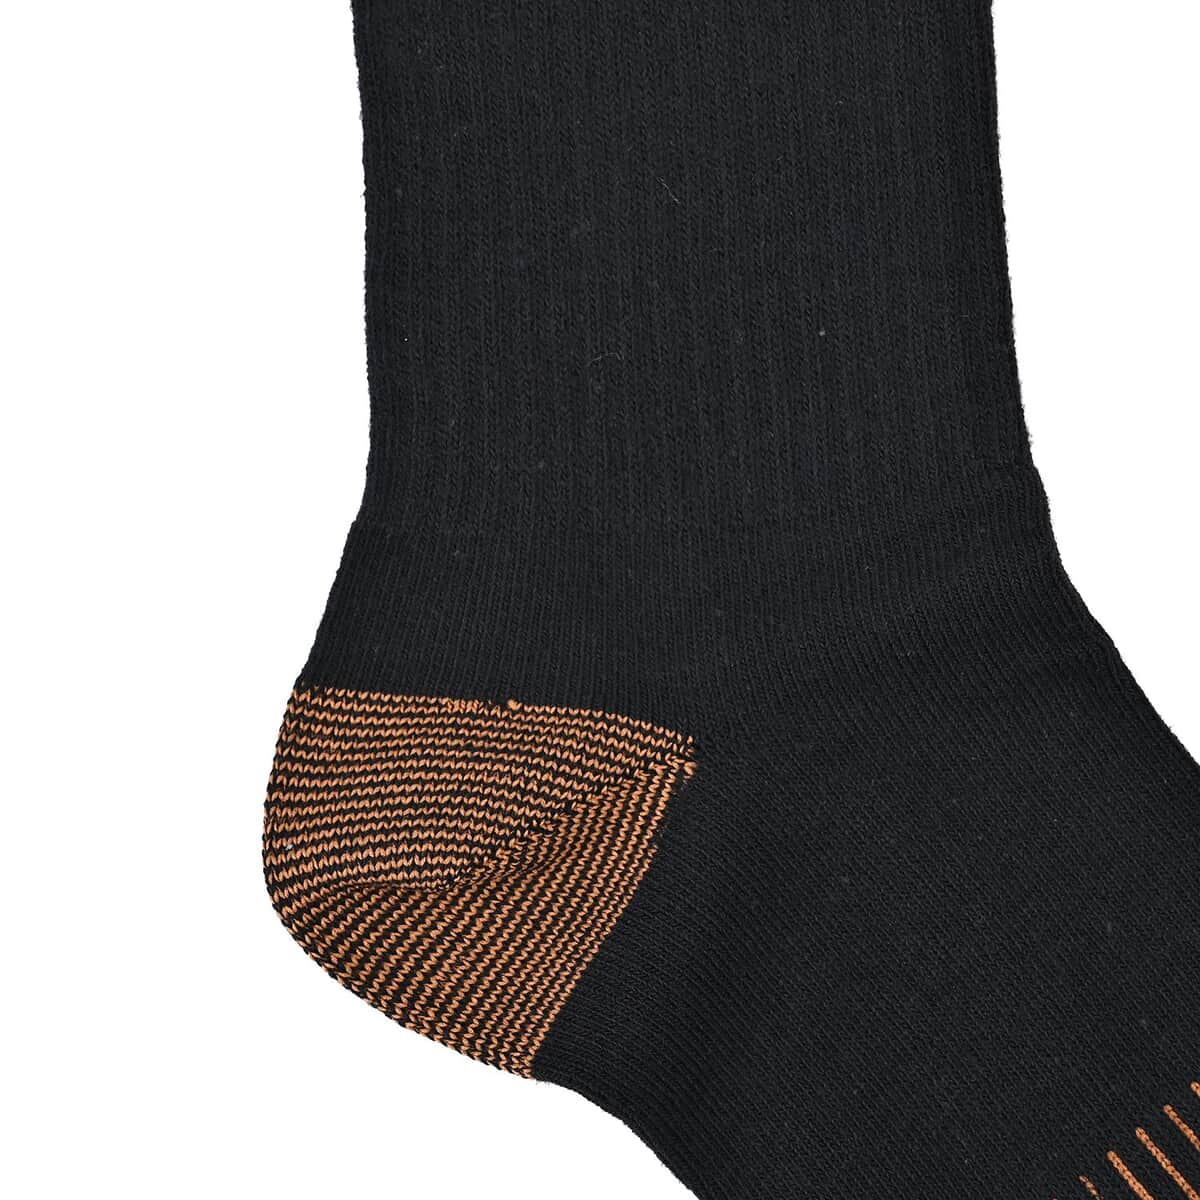 Set of 4 Pairs Knee Length Copper Infused Compression Socks - Black (L/XL) image number 2